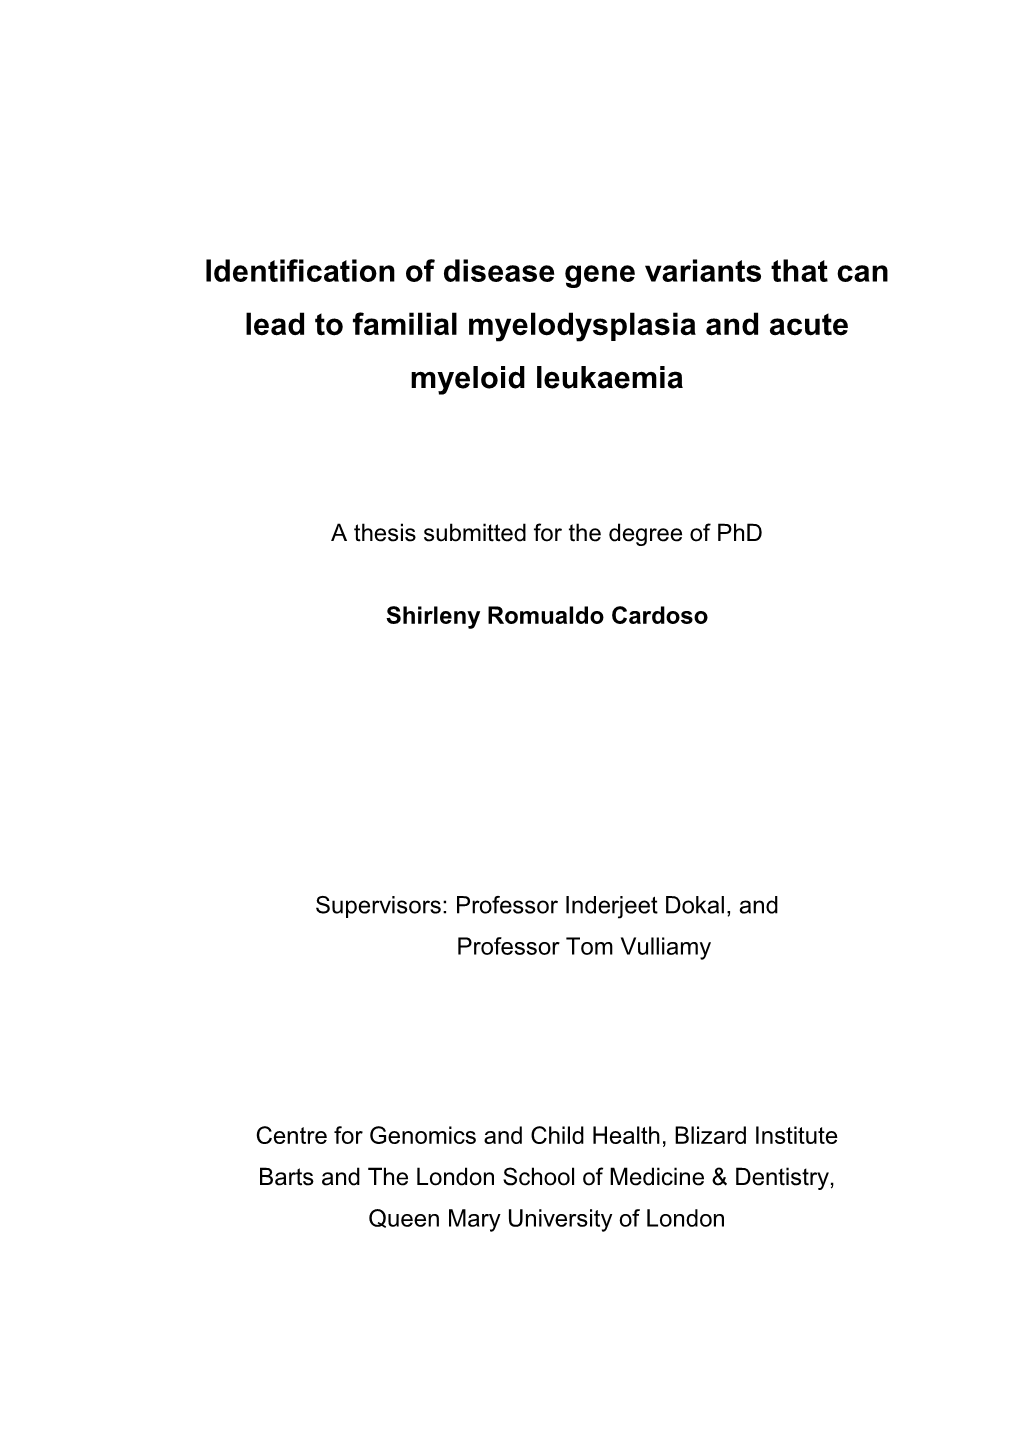 Identification of Disease Gene Variants That Can Lead to Familial Myelodysplasia and Acute Myeloid Leukaemia